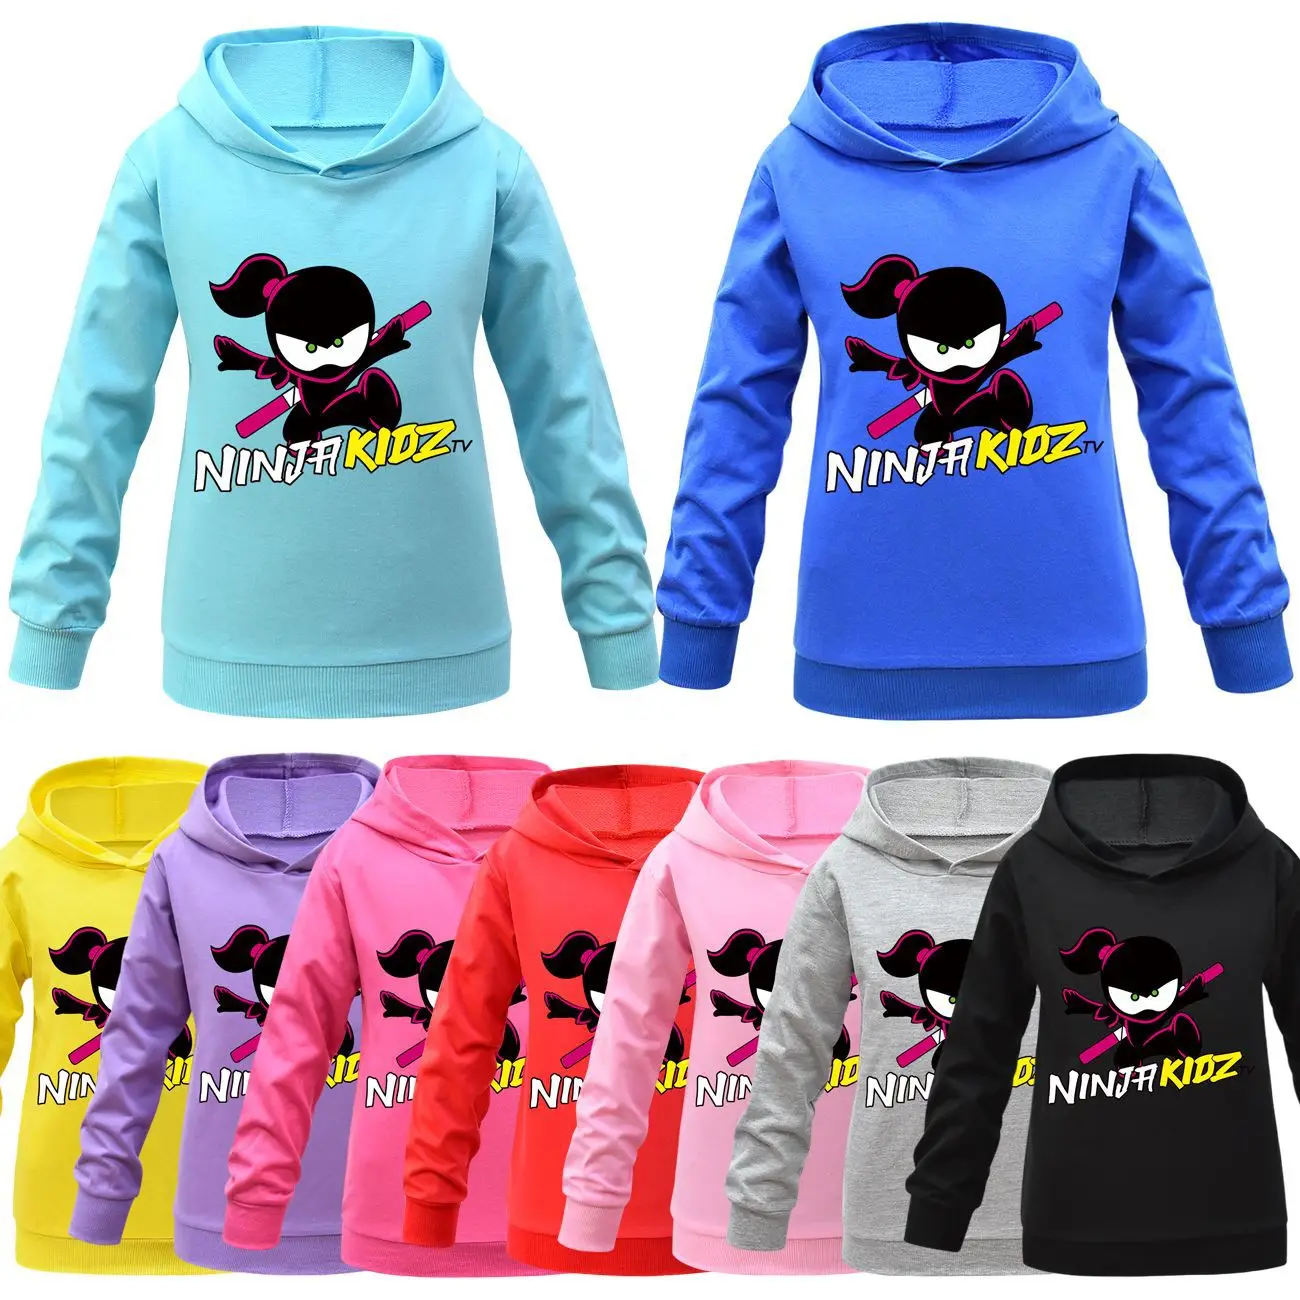 

Child Pullover Clothing NINJA KIDZ Game Kids Spring Autumn Full Sleeve Hoodie Sweatshirt Cartoon Girls Hoody Coat Boys Tops